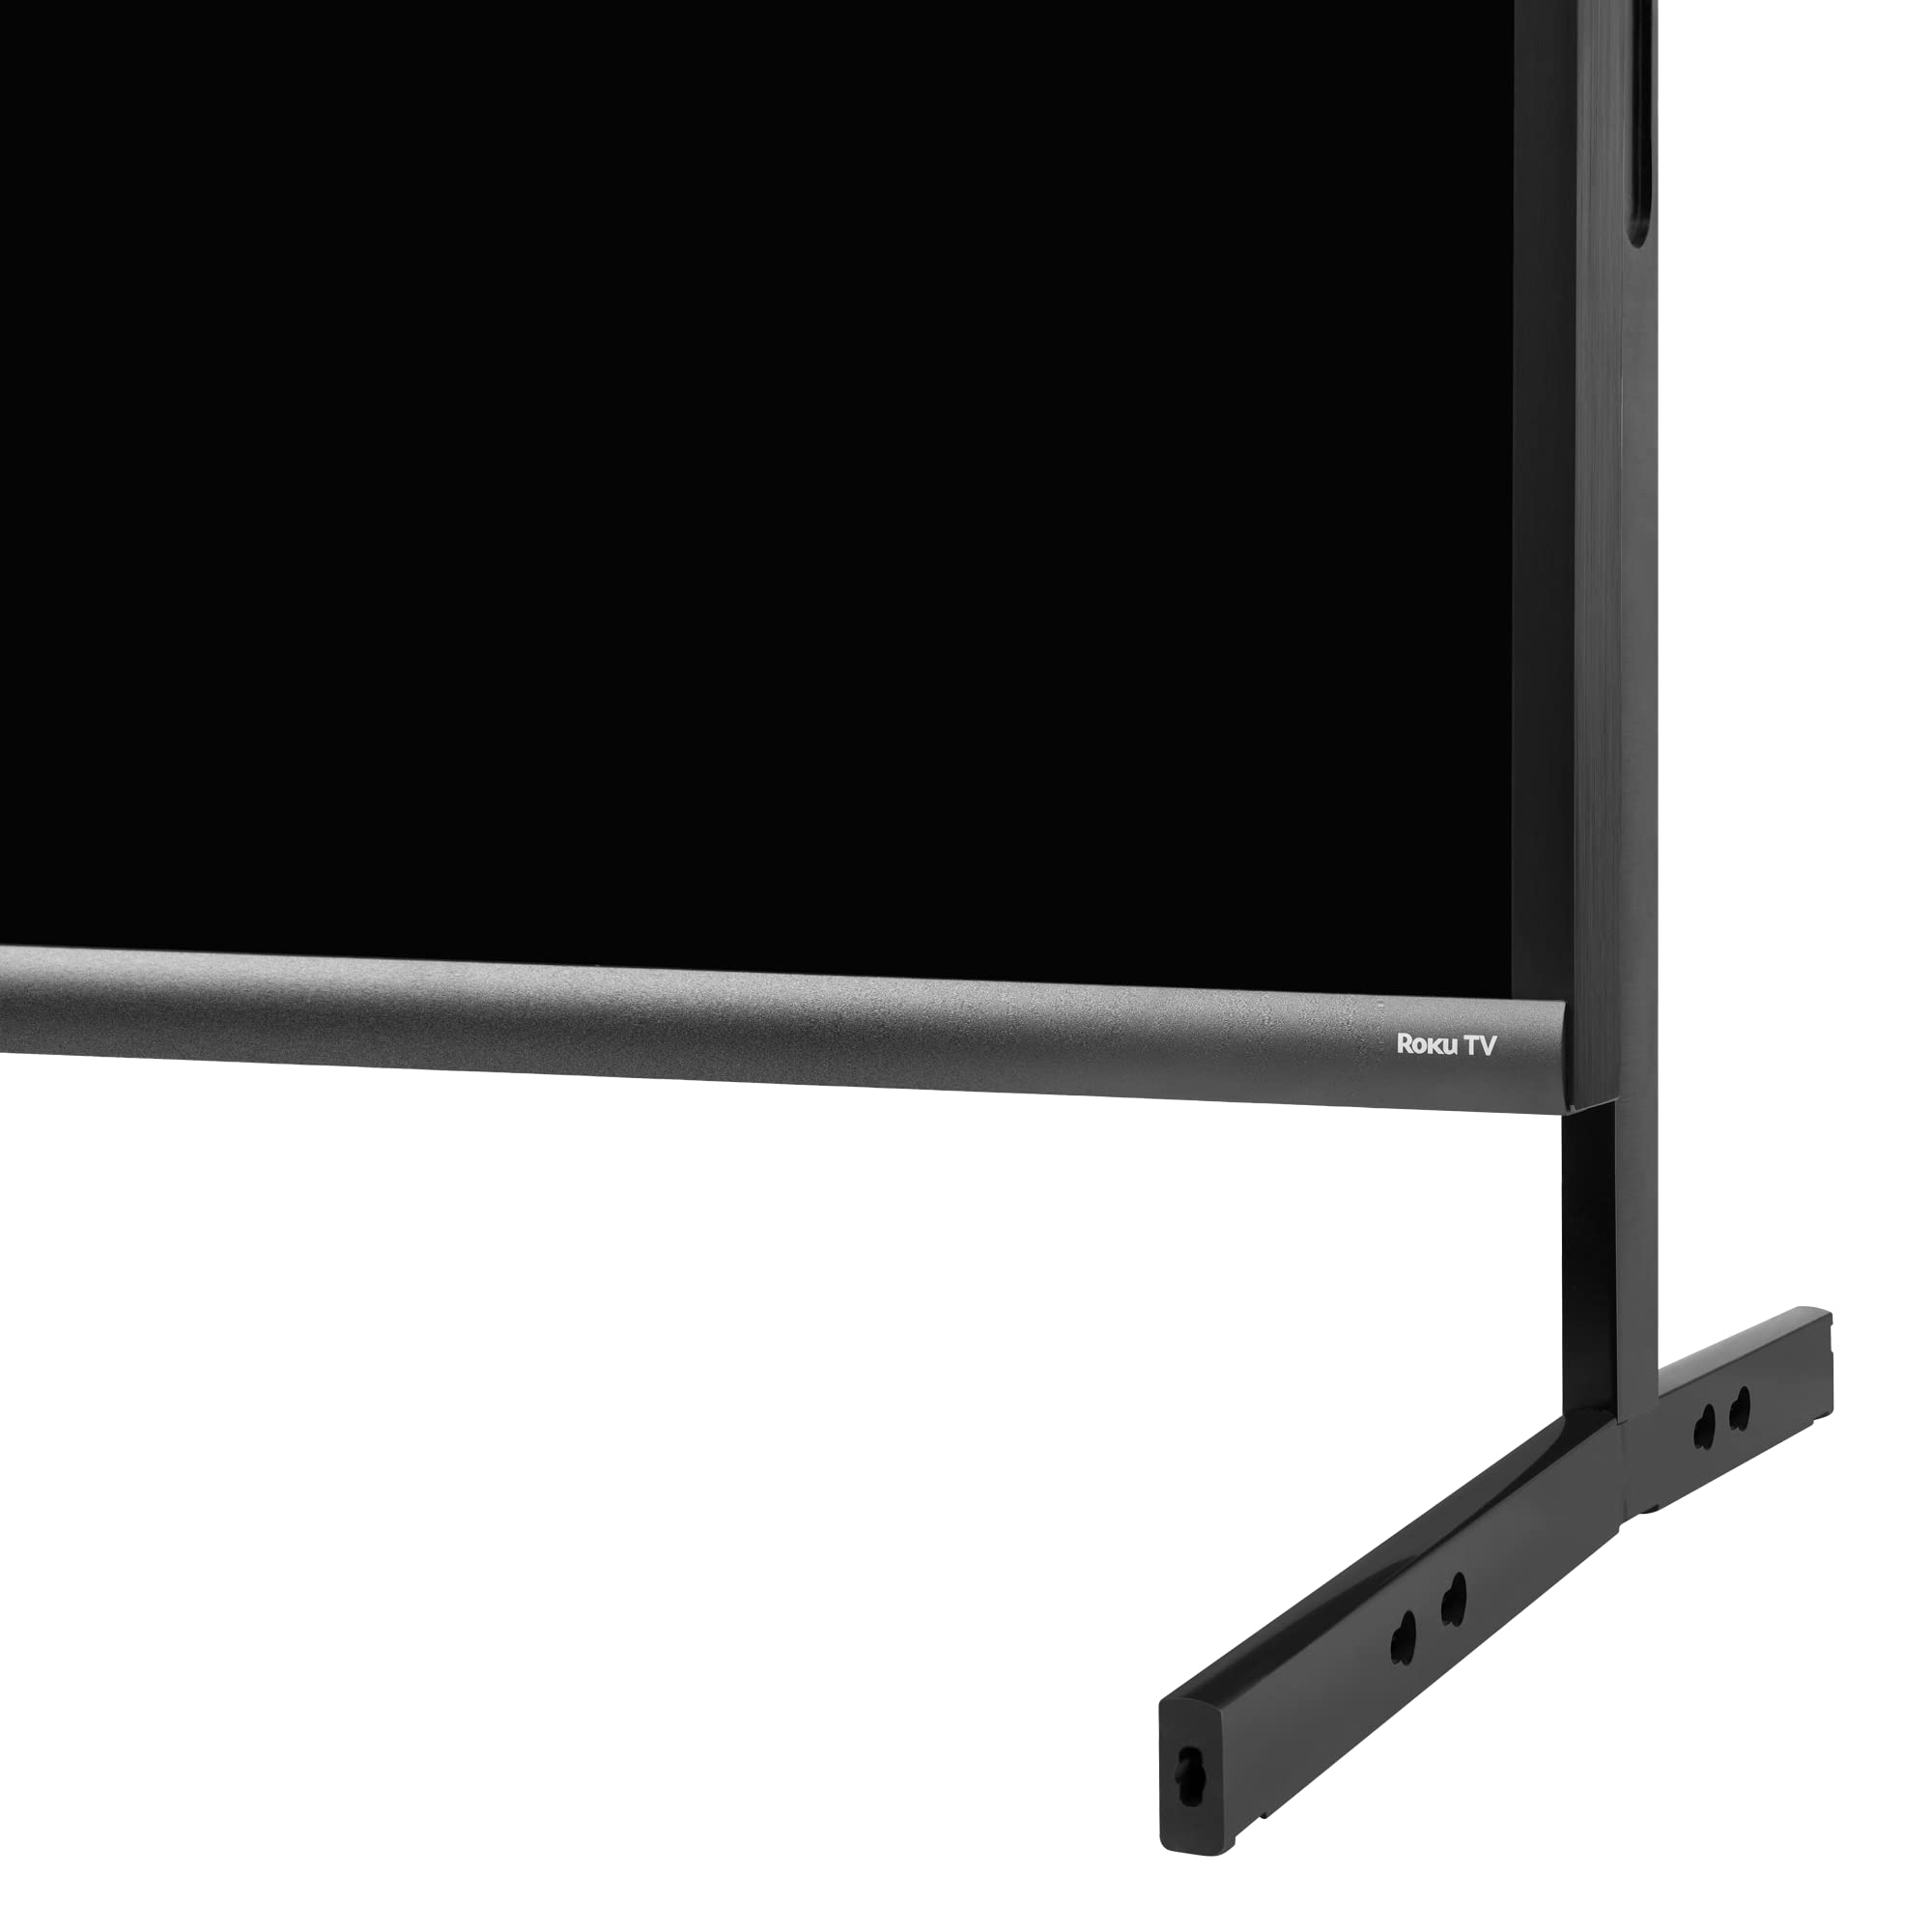 TCL 85-inch Class 4-Series 4K UHD HDR Smart Roku TV - 85S435, 2021 Model , Black